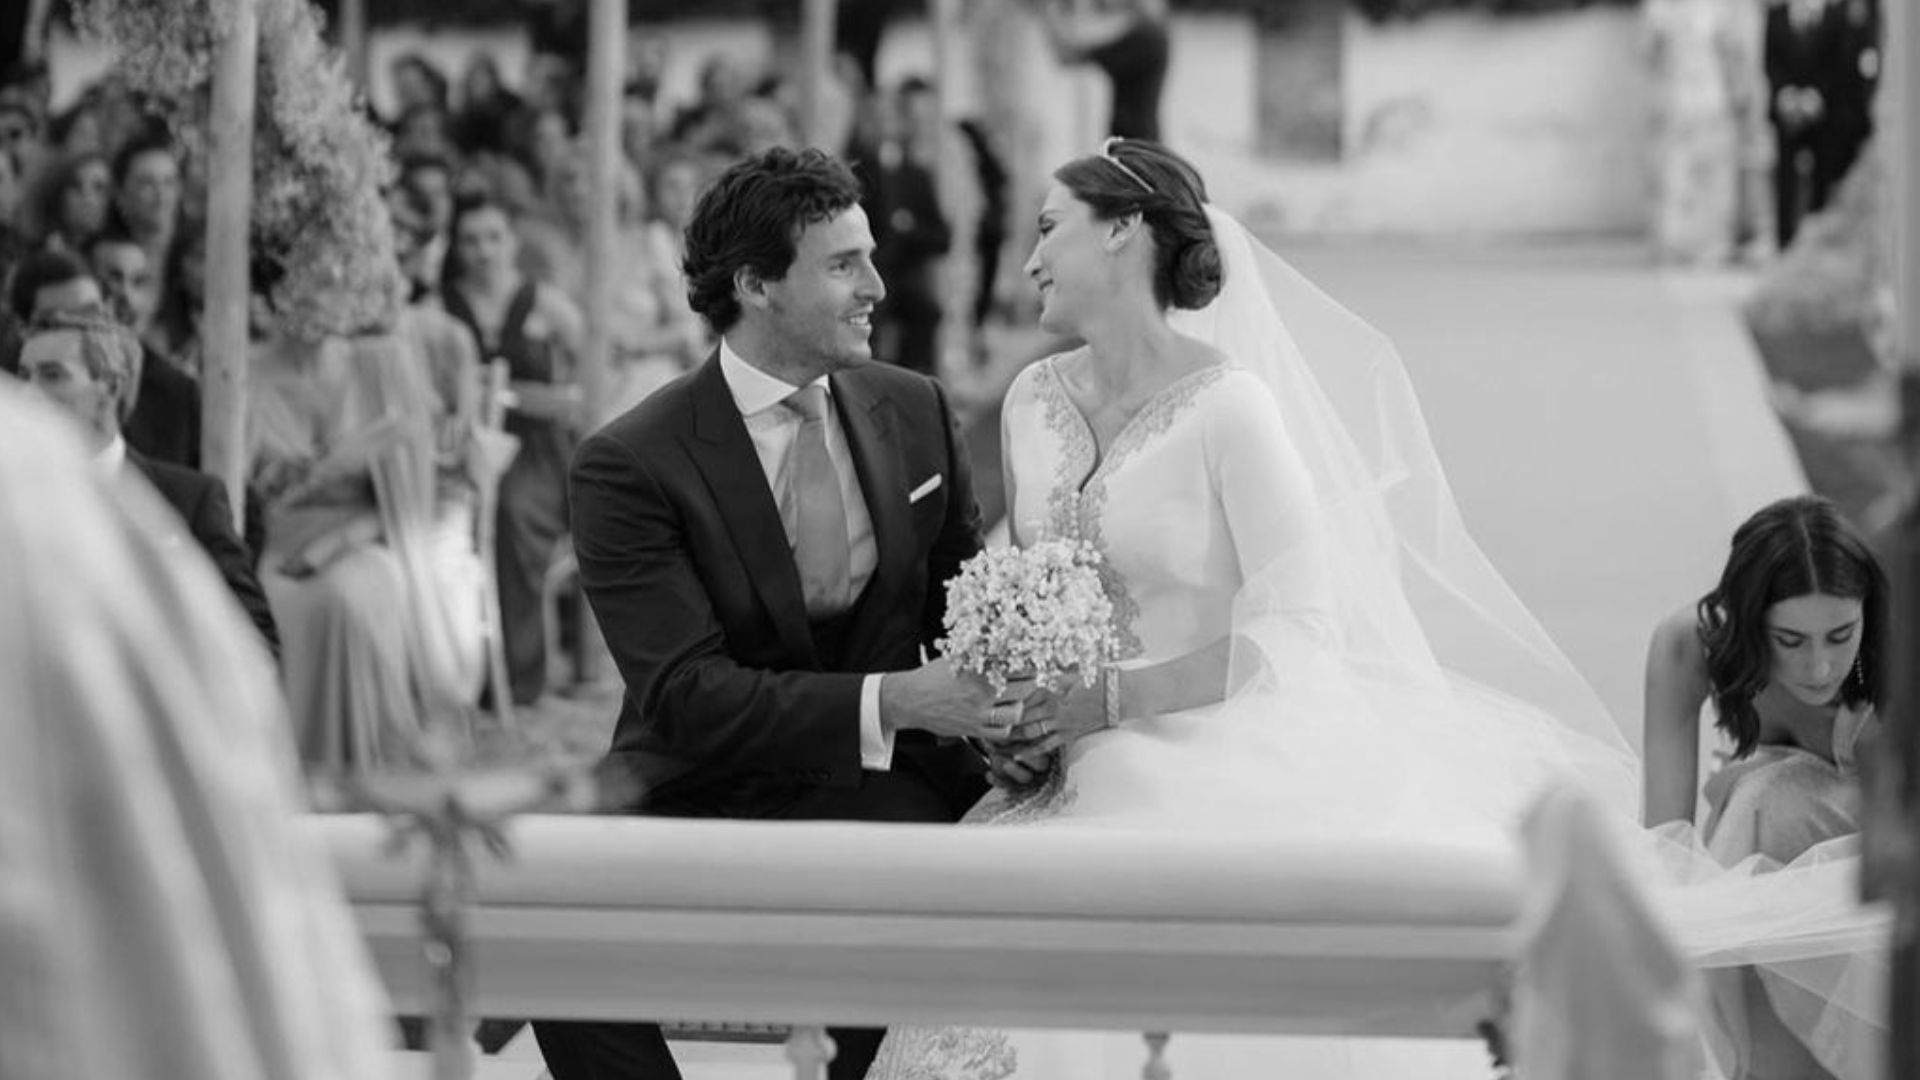 Tamara Falcó muestra fotos inéditas de su boda con Íñigo Onieva